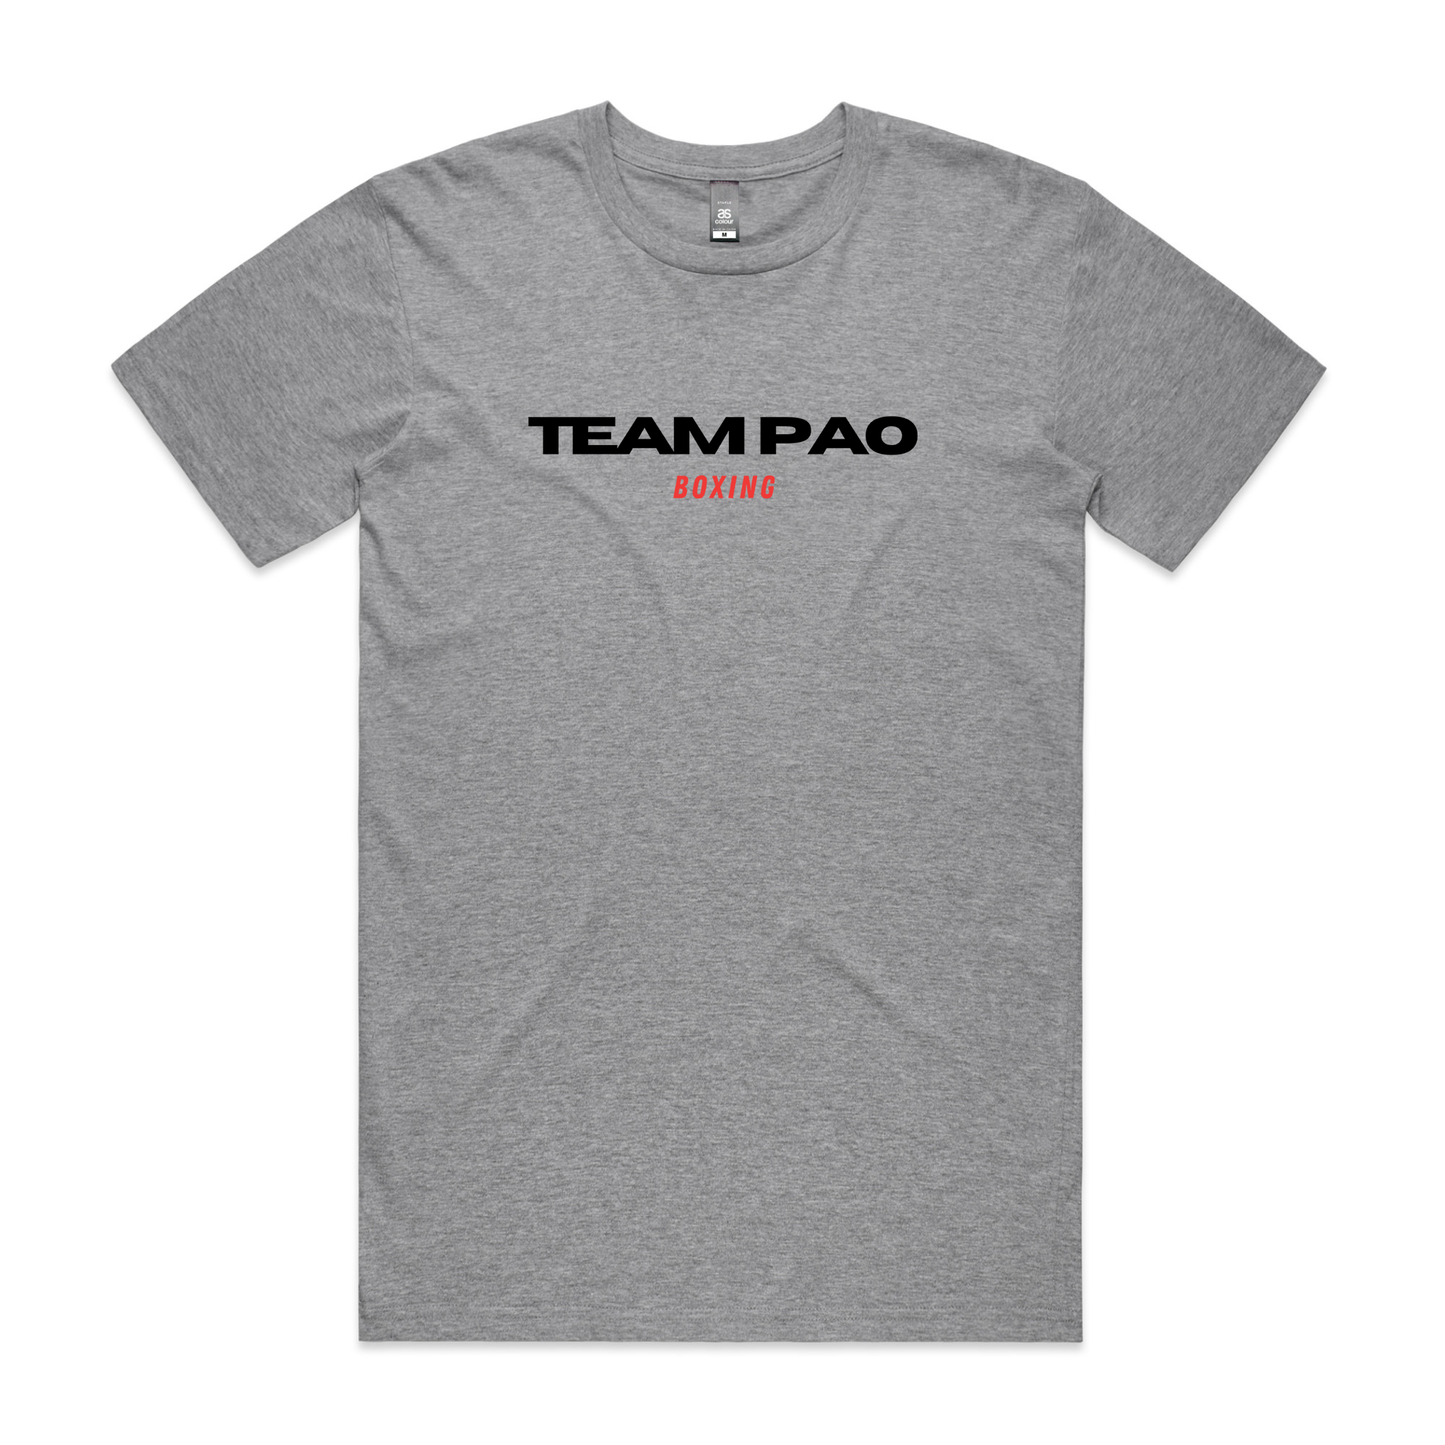 Team Pao Tee - Grey